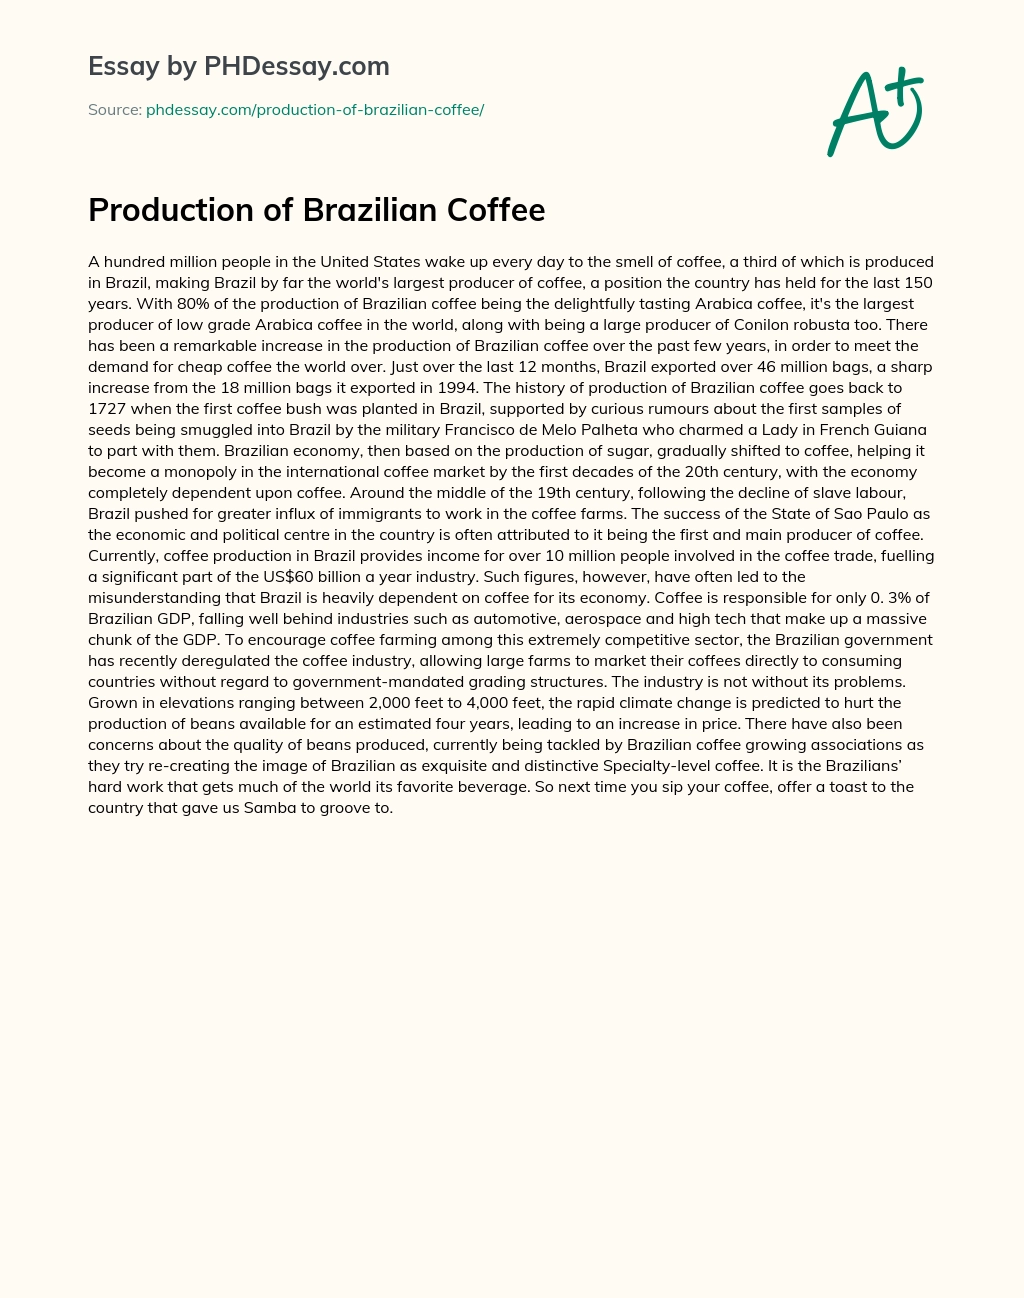 Production of Brazilian Coffee essay